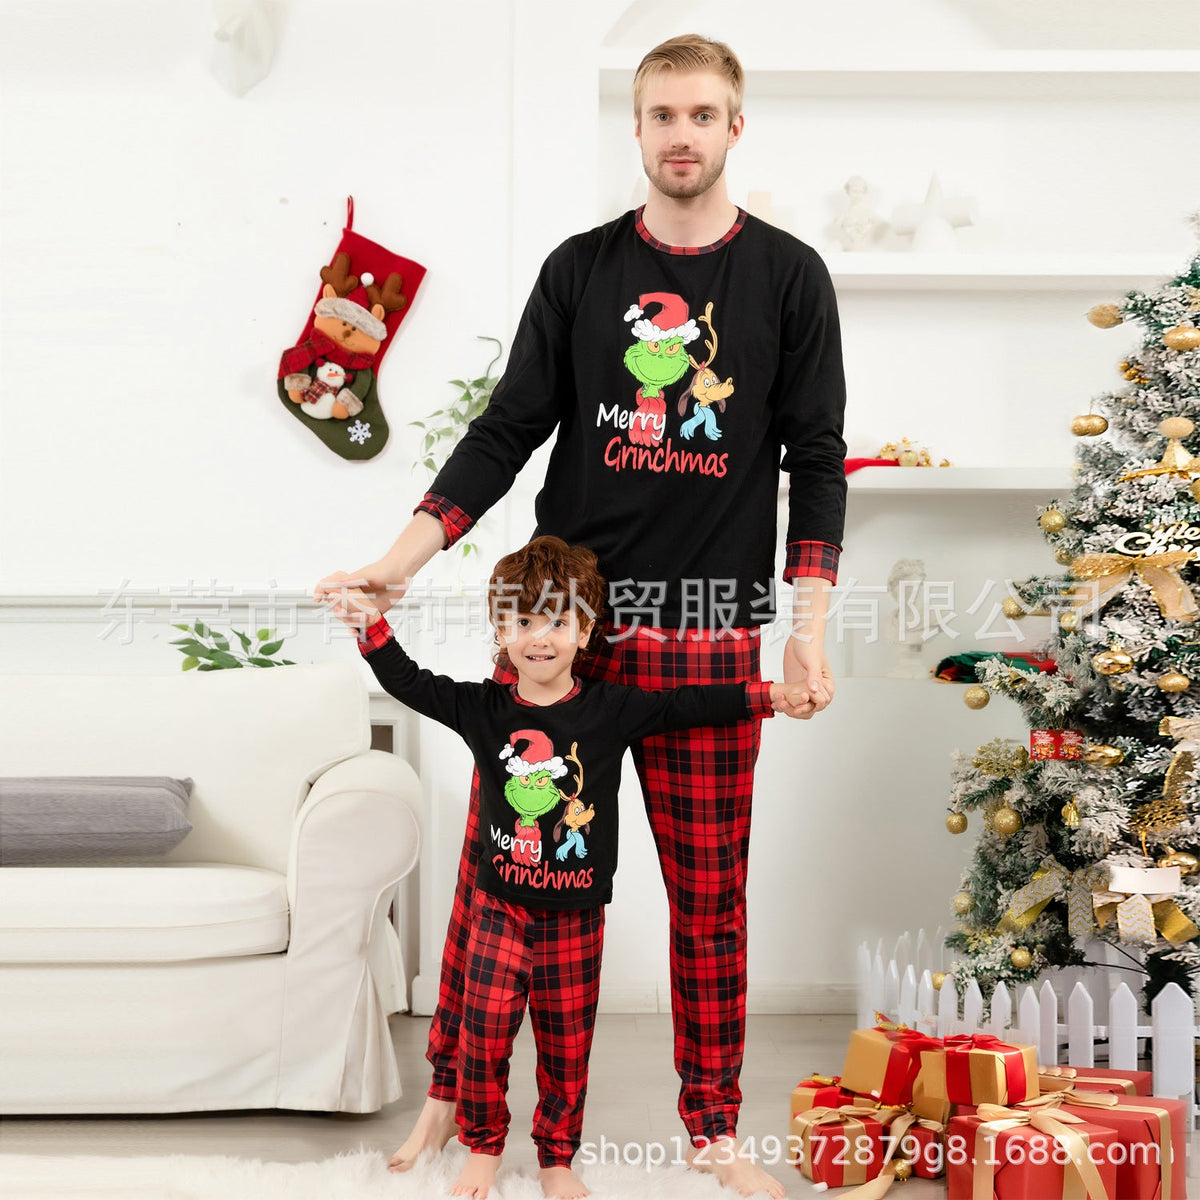 Family Christmas Pajamas Snowman Prints Matching Loungewear